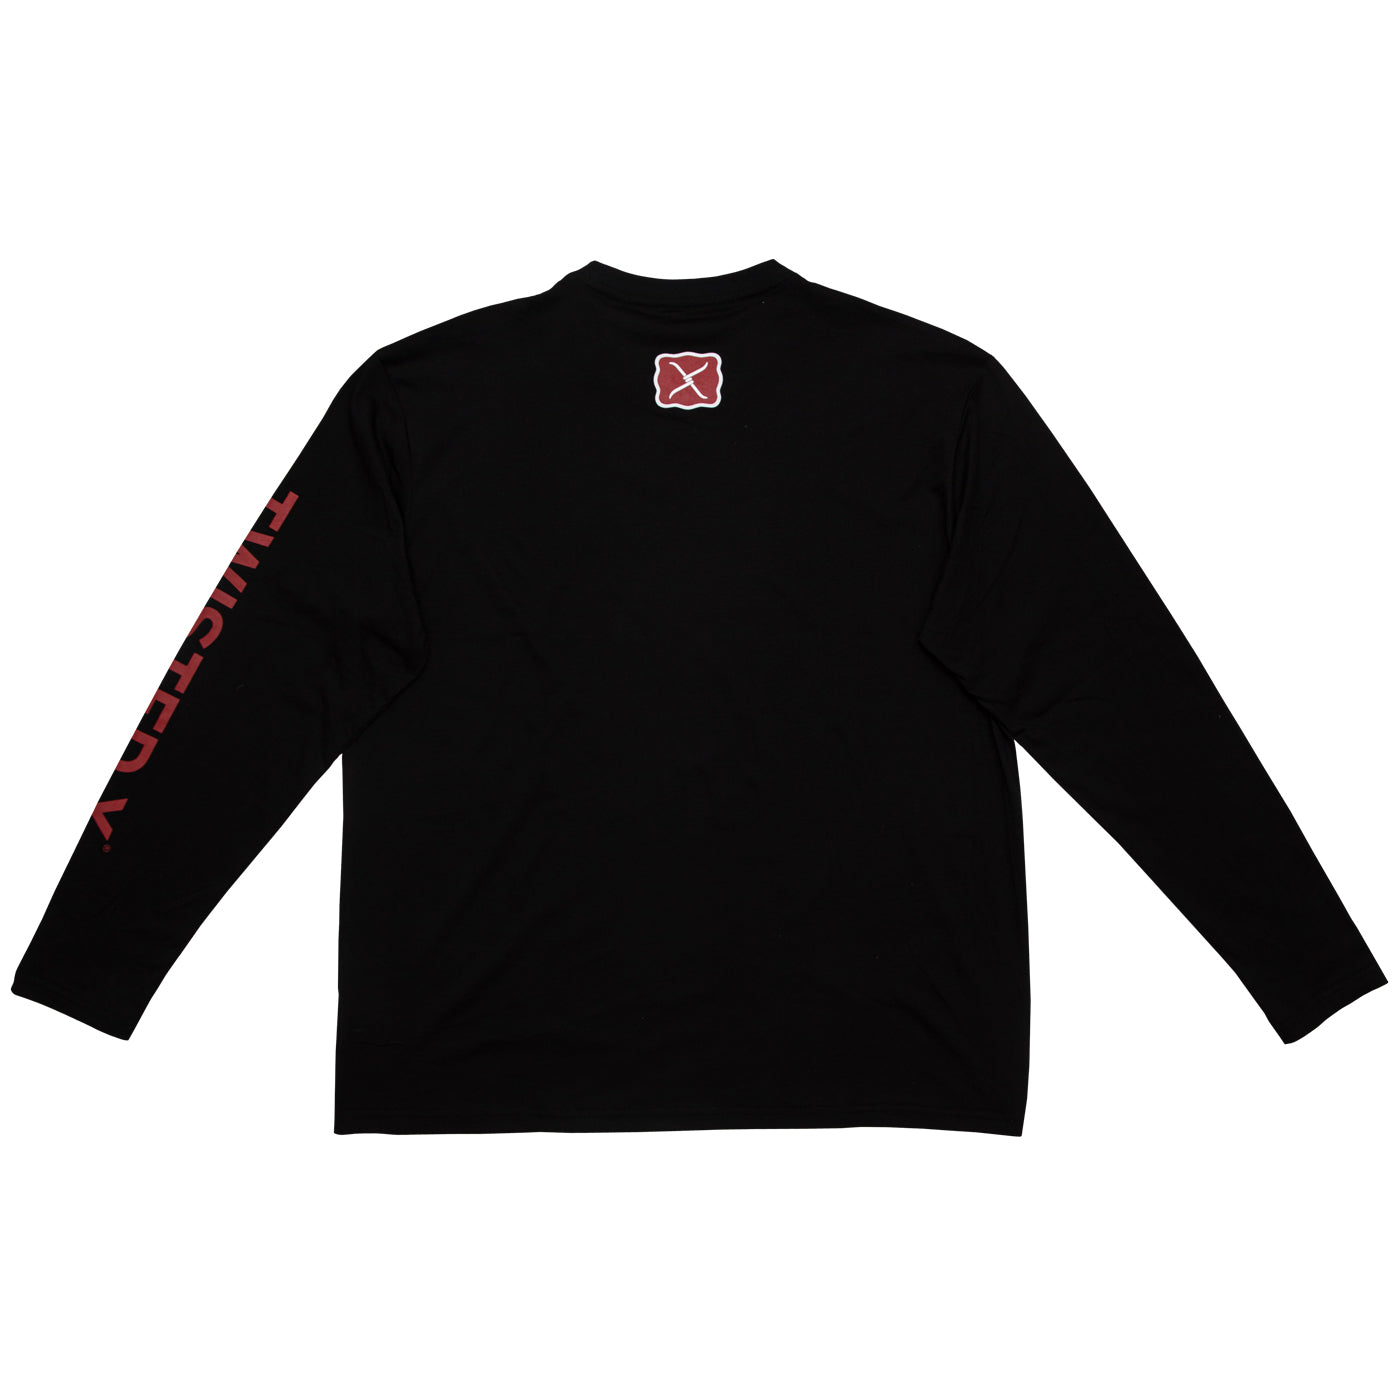 Twisted X Black Long Sleeve T-Shirt